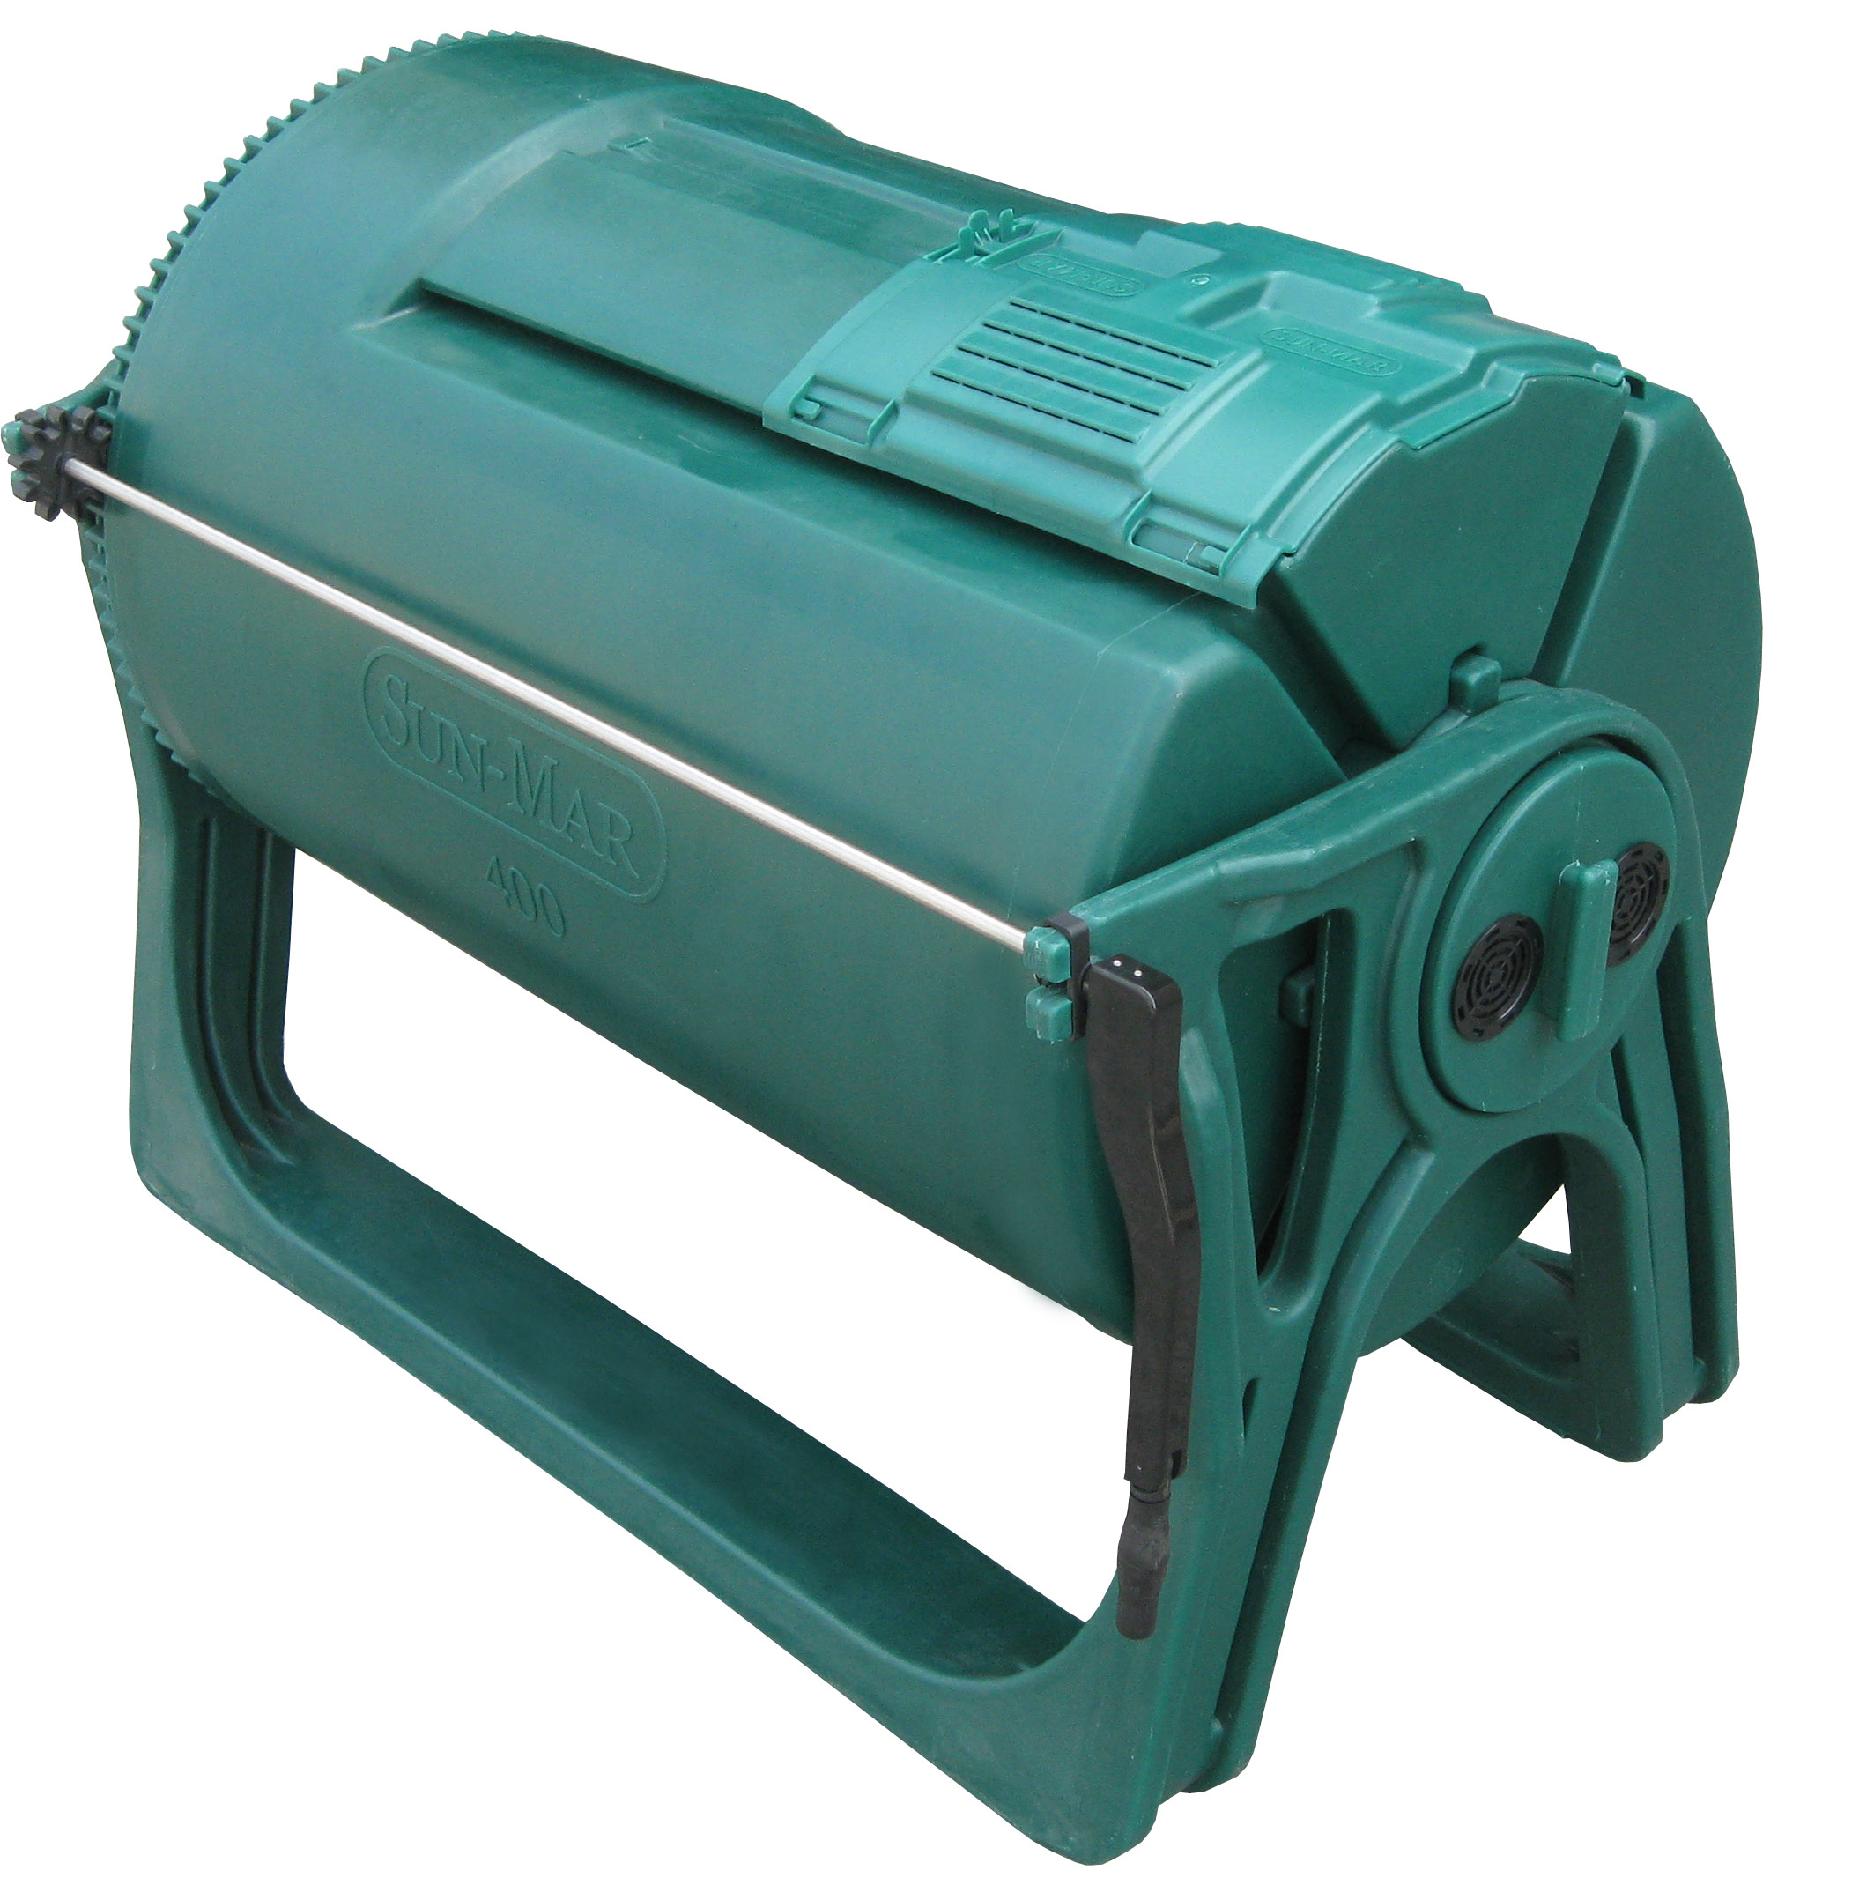 autoflow tumbler composter Your Composter MAR  Online Shop Garden SUN  400 Way: